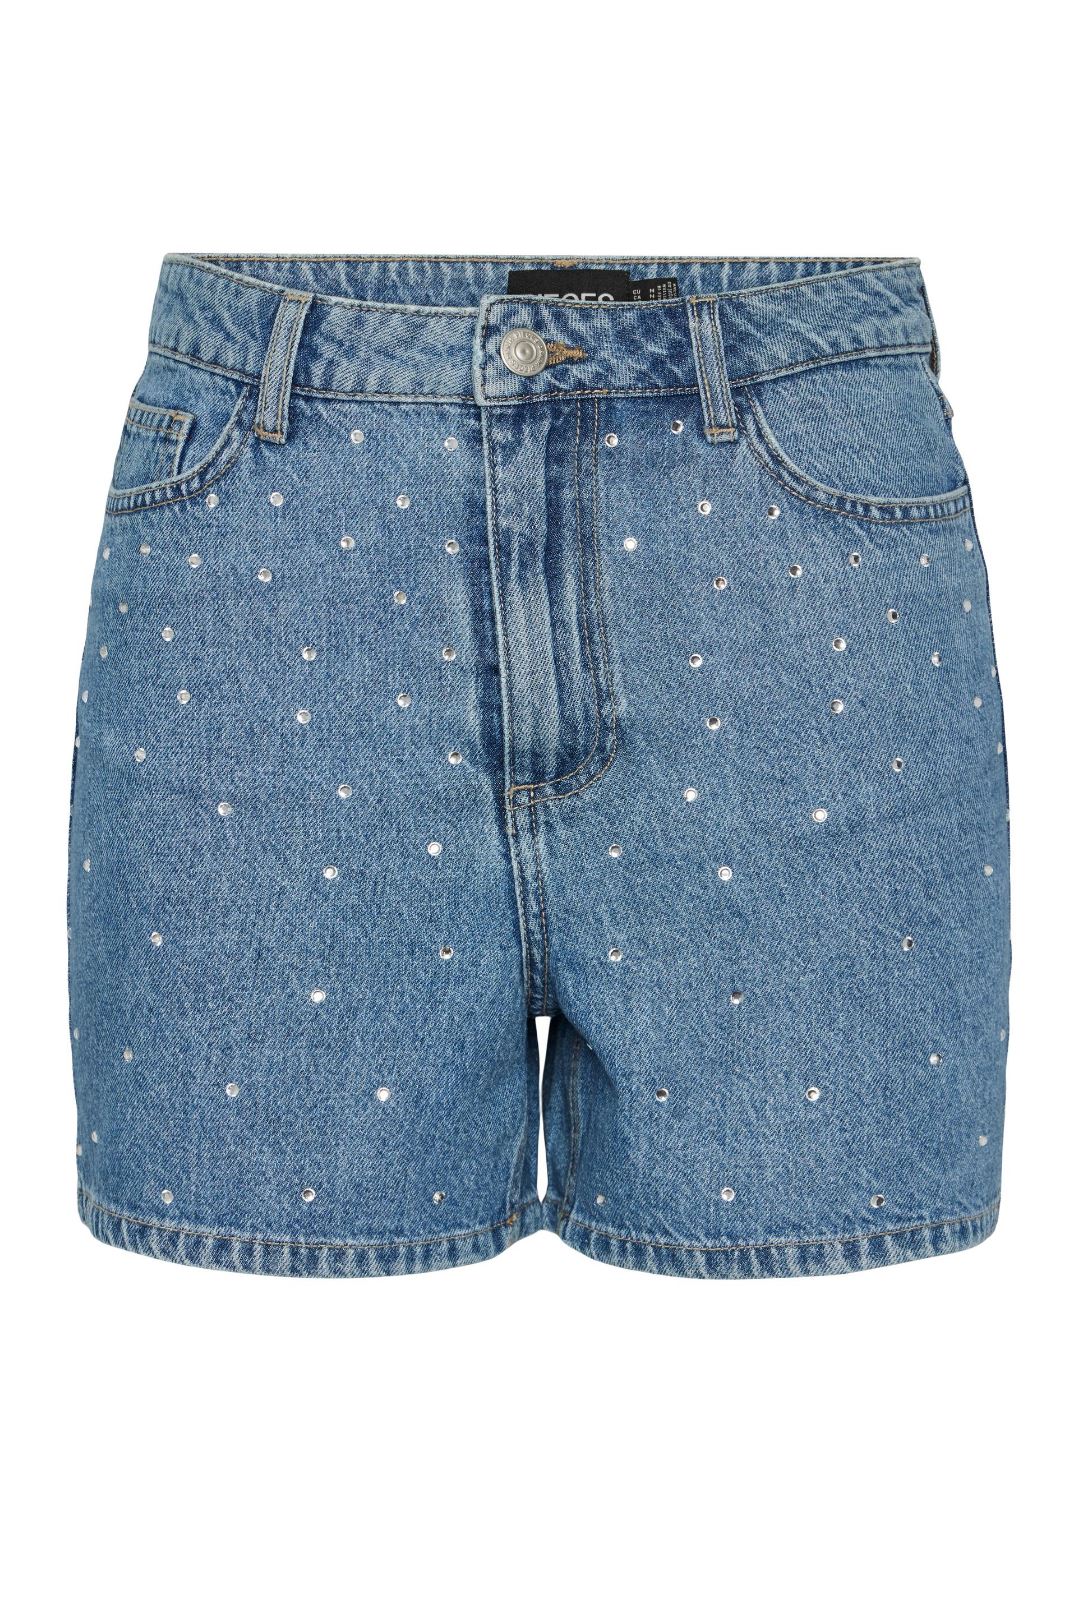 Pieces - Pcsky Rhinestone Shorts - 4456643 Medium Blue Denim Rhinestones Shorts 